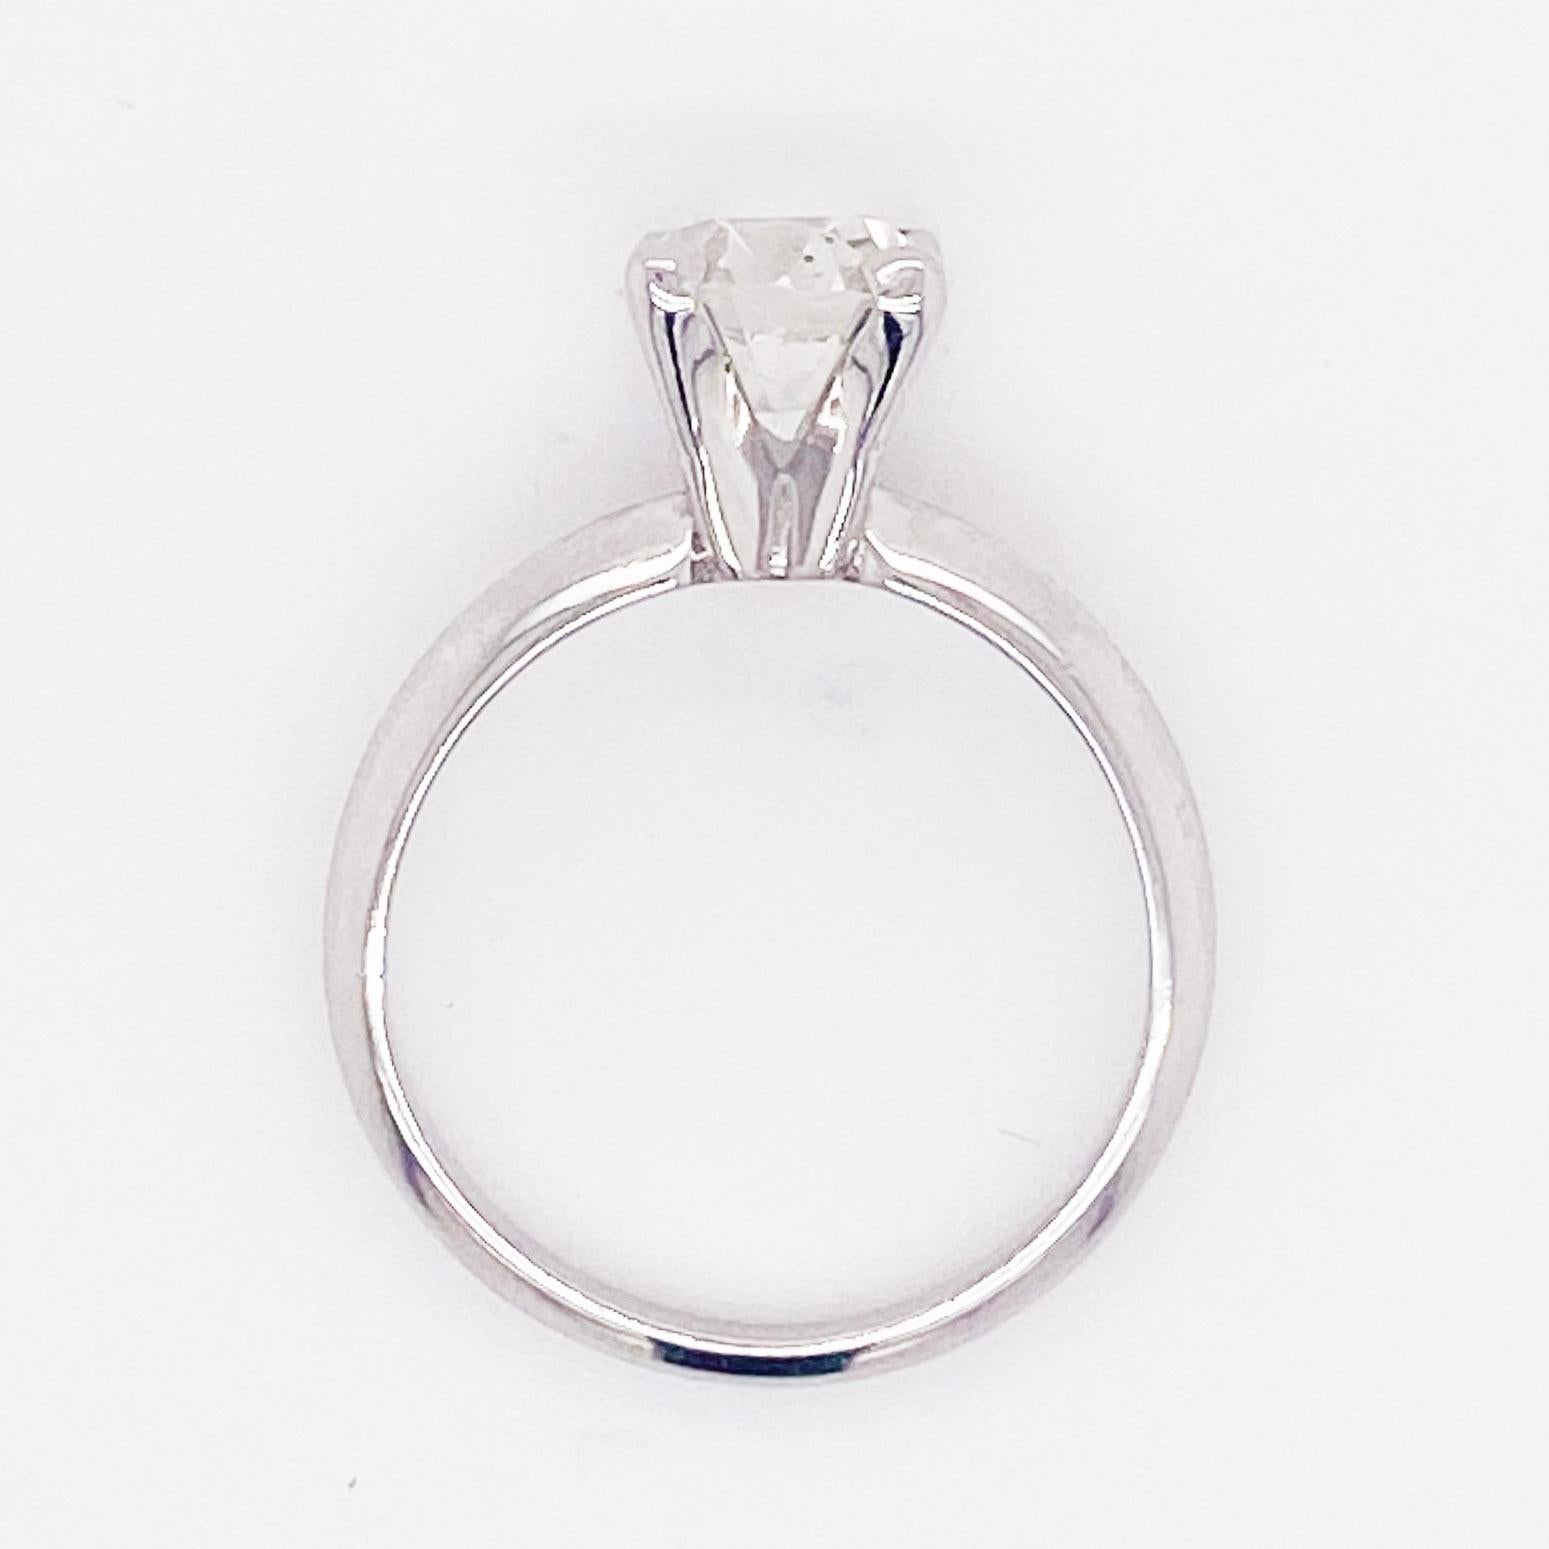 Romantic Vintage Platinum 1.5 Carats OEC Solitaire Ring, Old European Cut Diamond For Sale